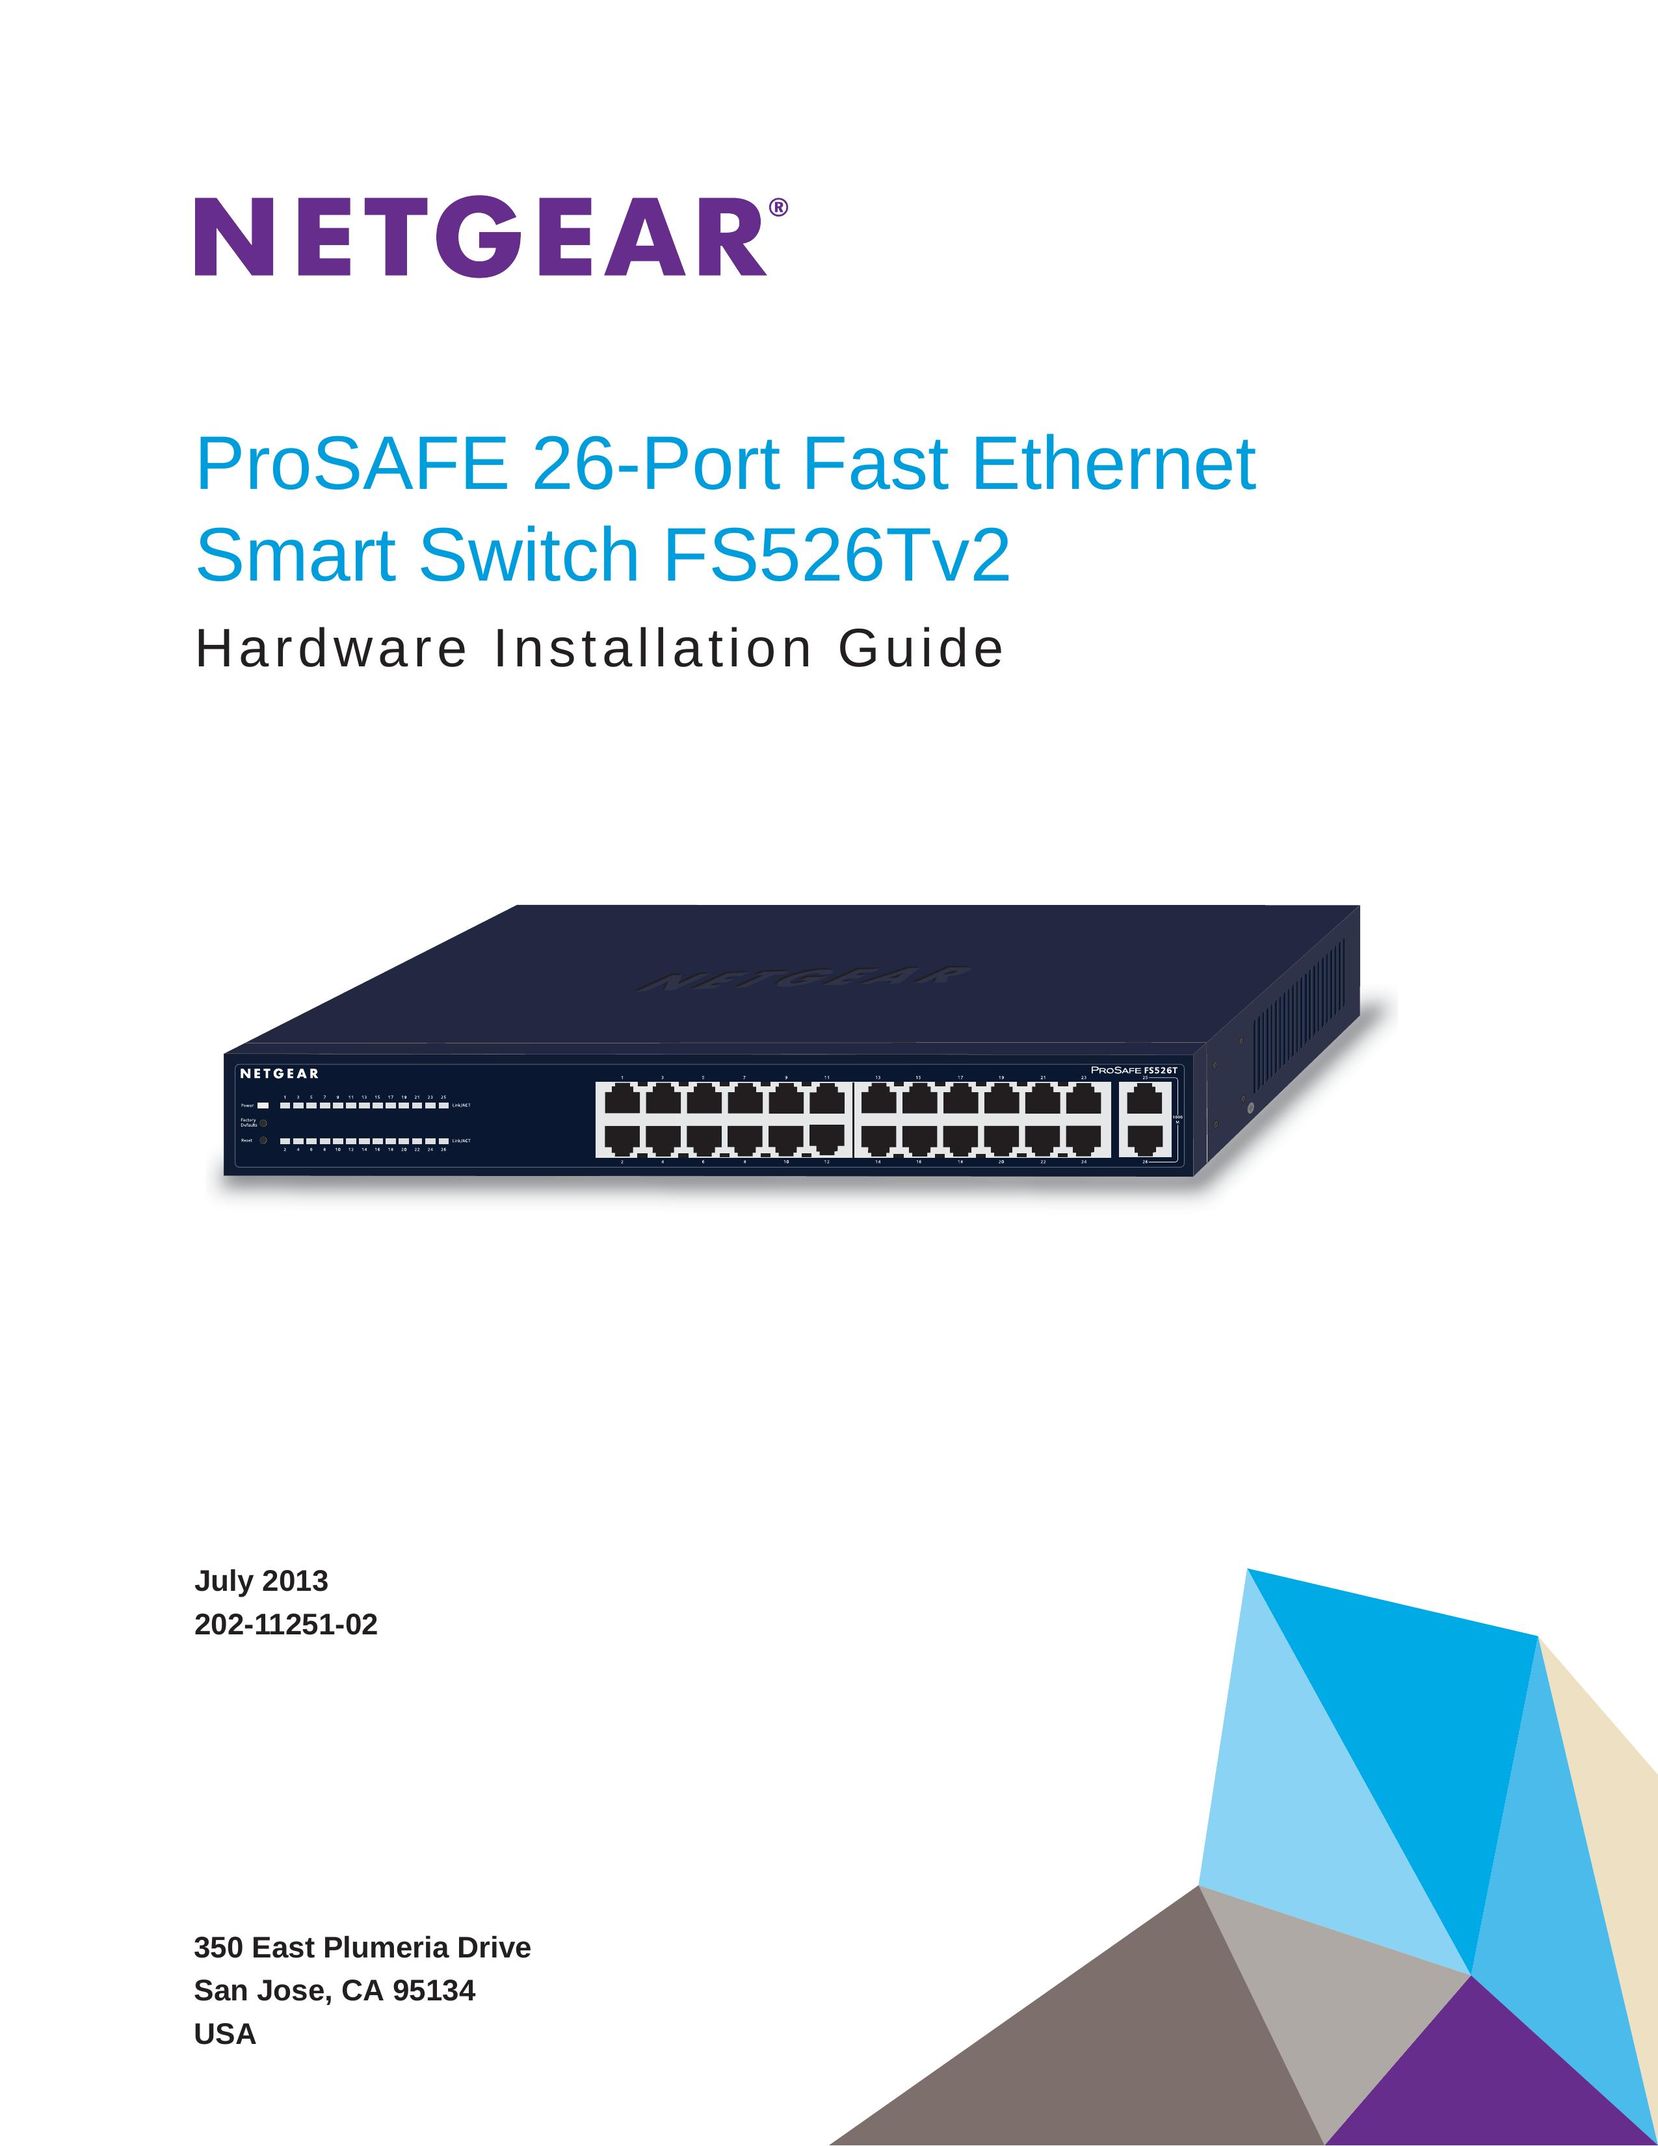 NETGEAR FS526Tv2 Network Card User Manual